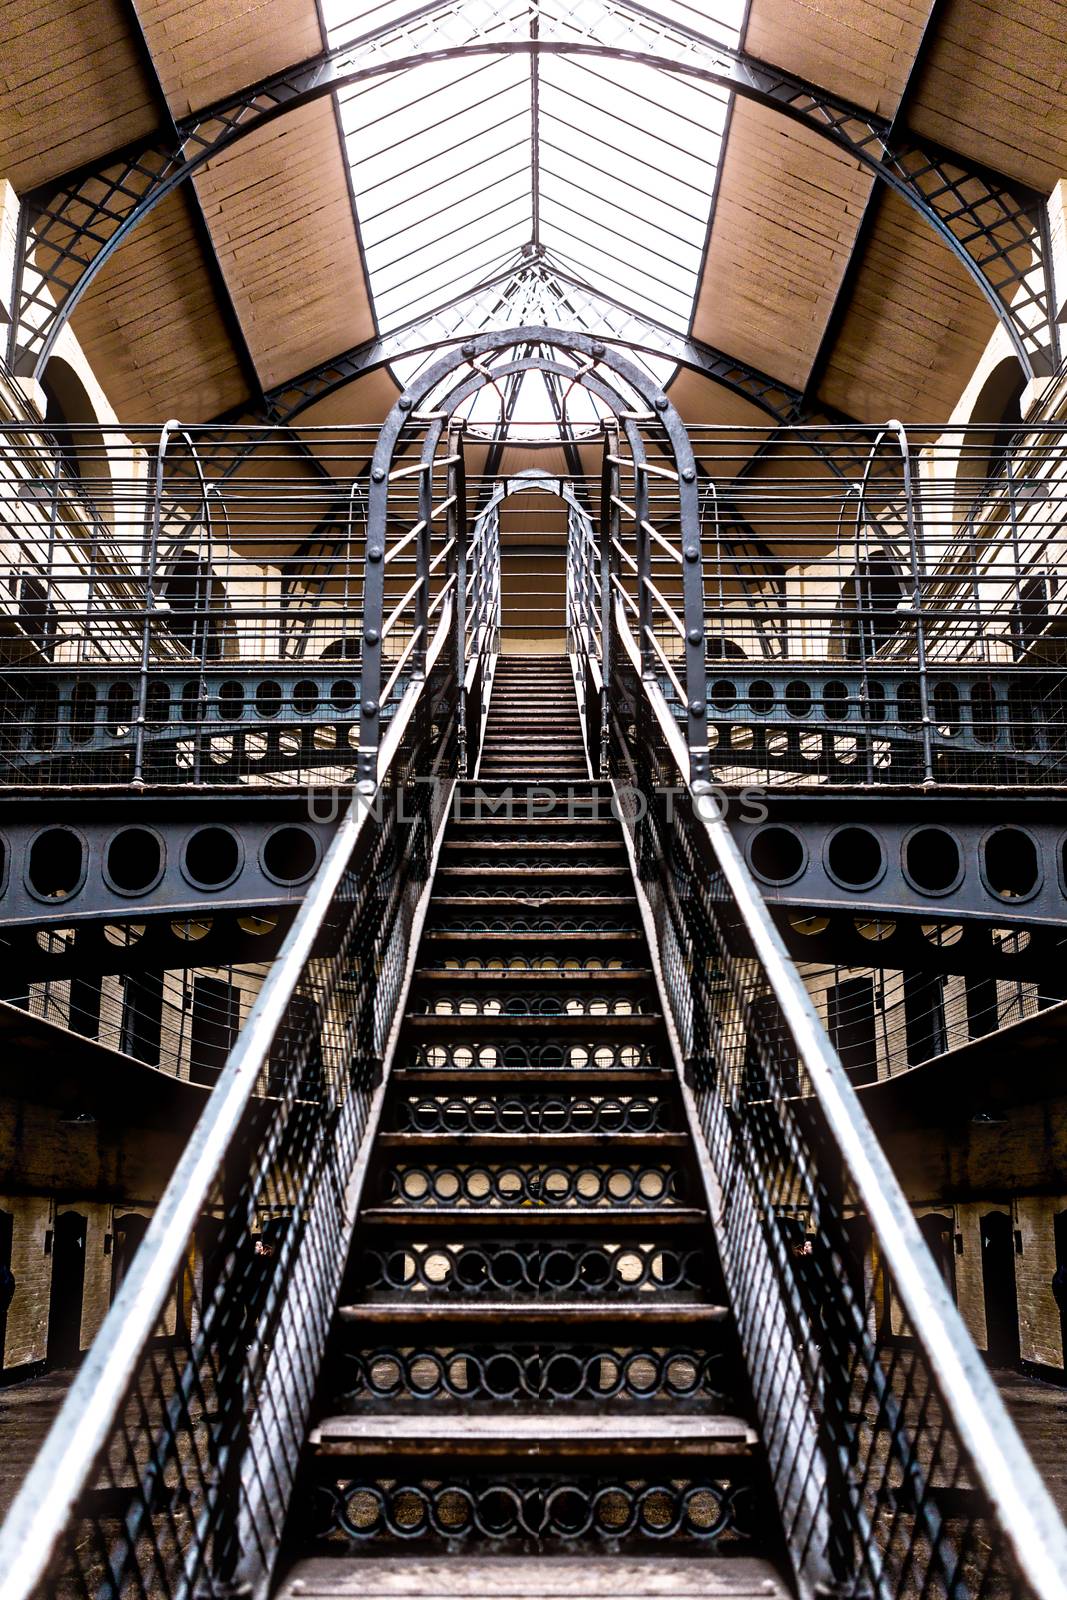 Ireland Dublin jan 21 2017 Kilmainham Gaol (Irish: Príosún Chill Mhaighneann), first built in 1796, is a former prison, located in Kilmainham in Dublin, and played an important part in Irish history.